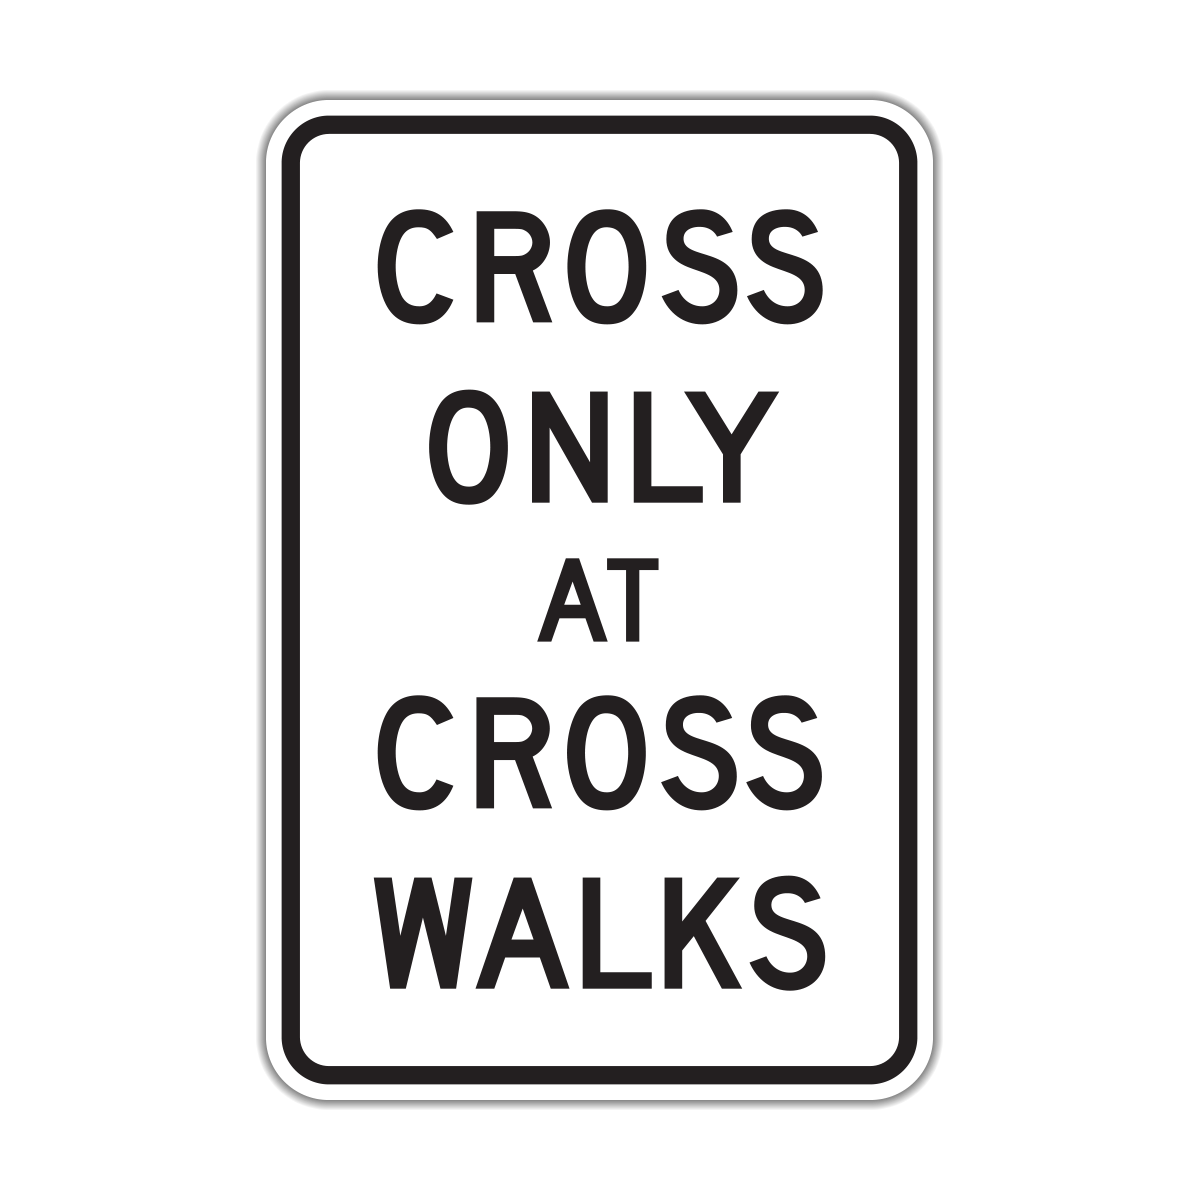 R9-2 Cross Only At Crosswalks